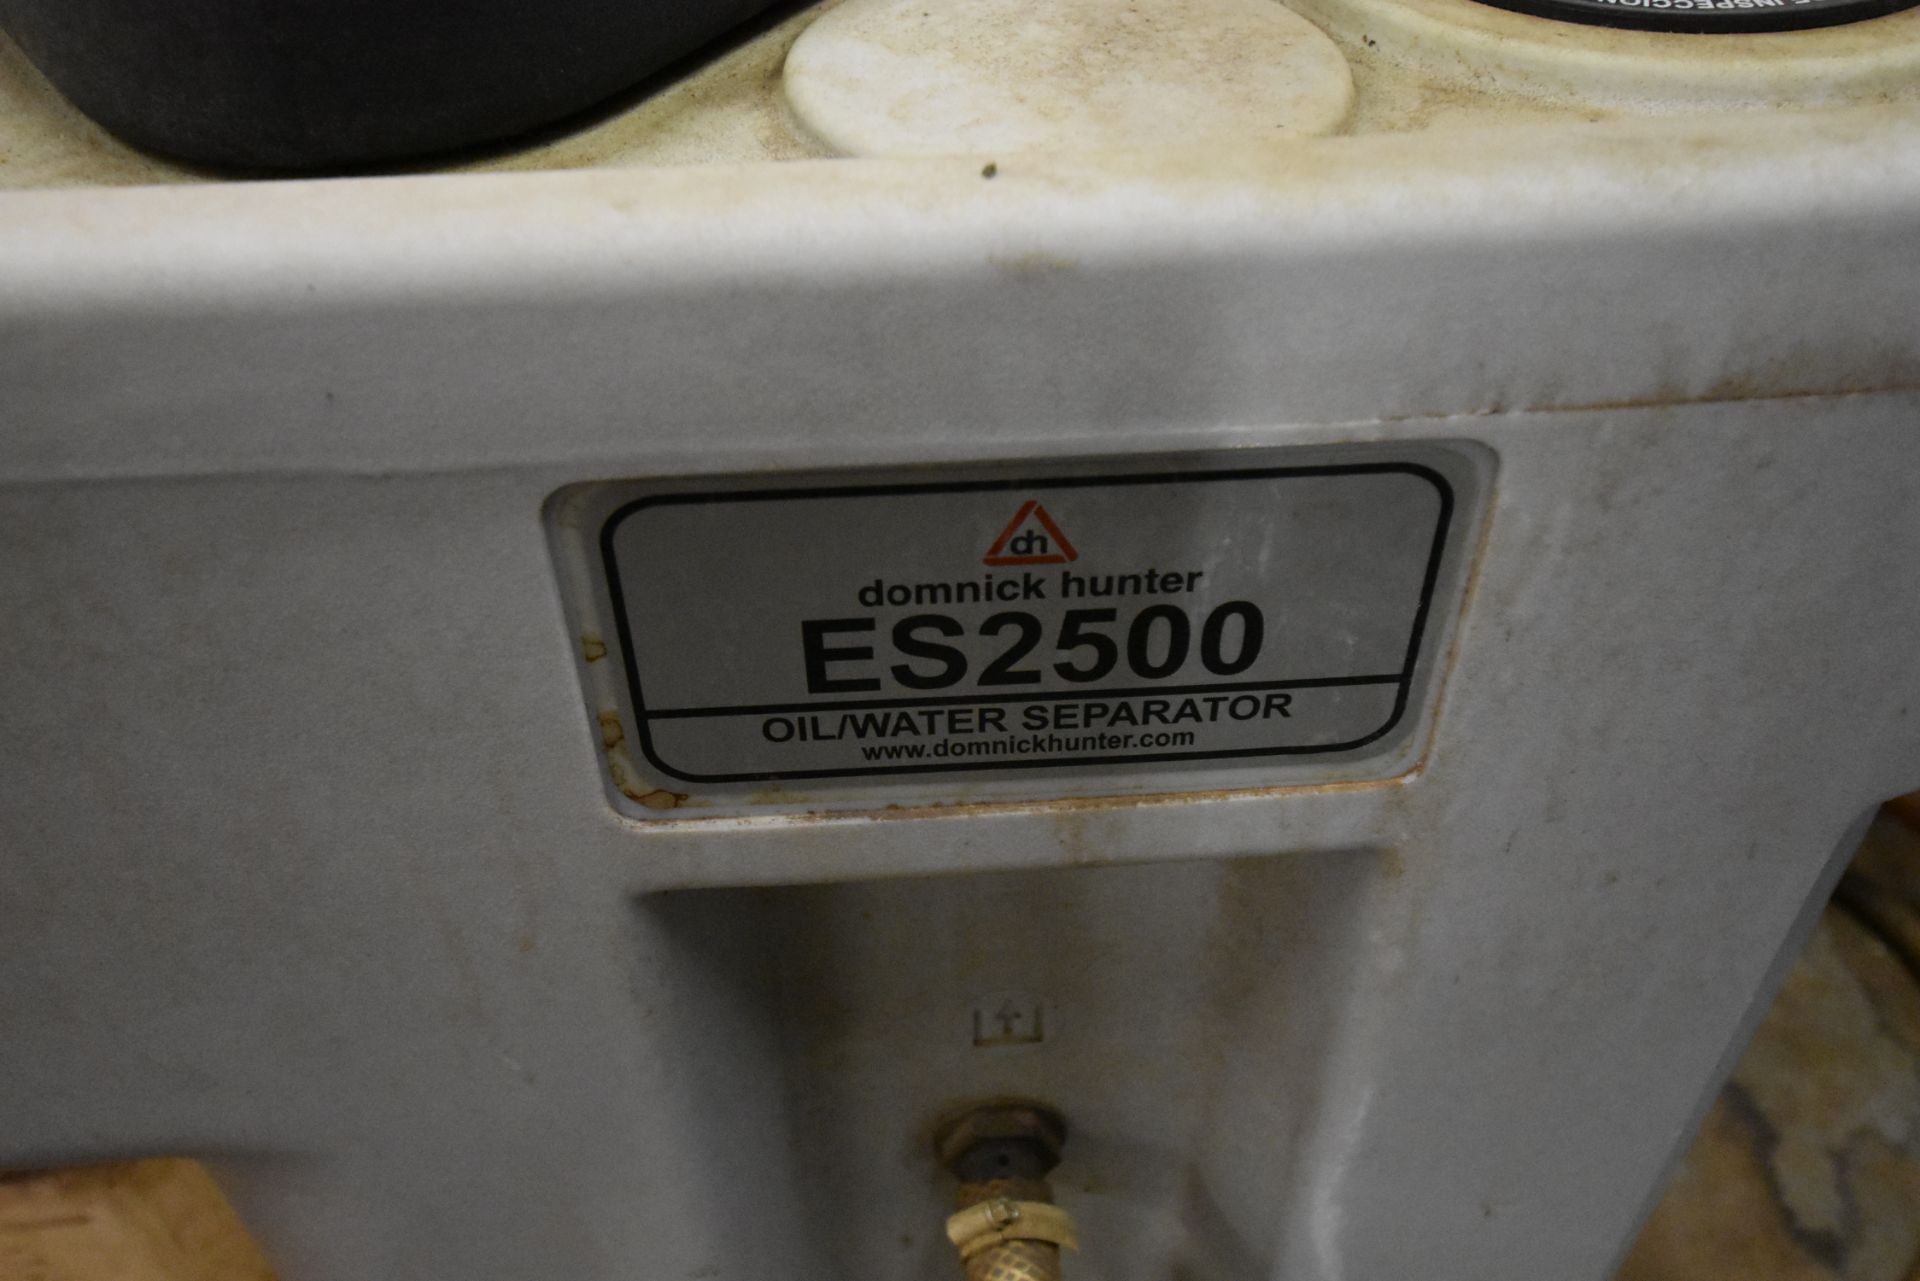 Domnick Hunter ES2500 Oil/ Water Separator - Image 2 of 2